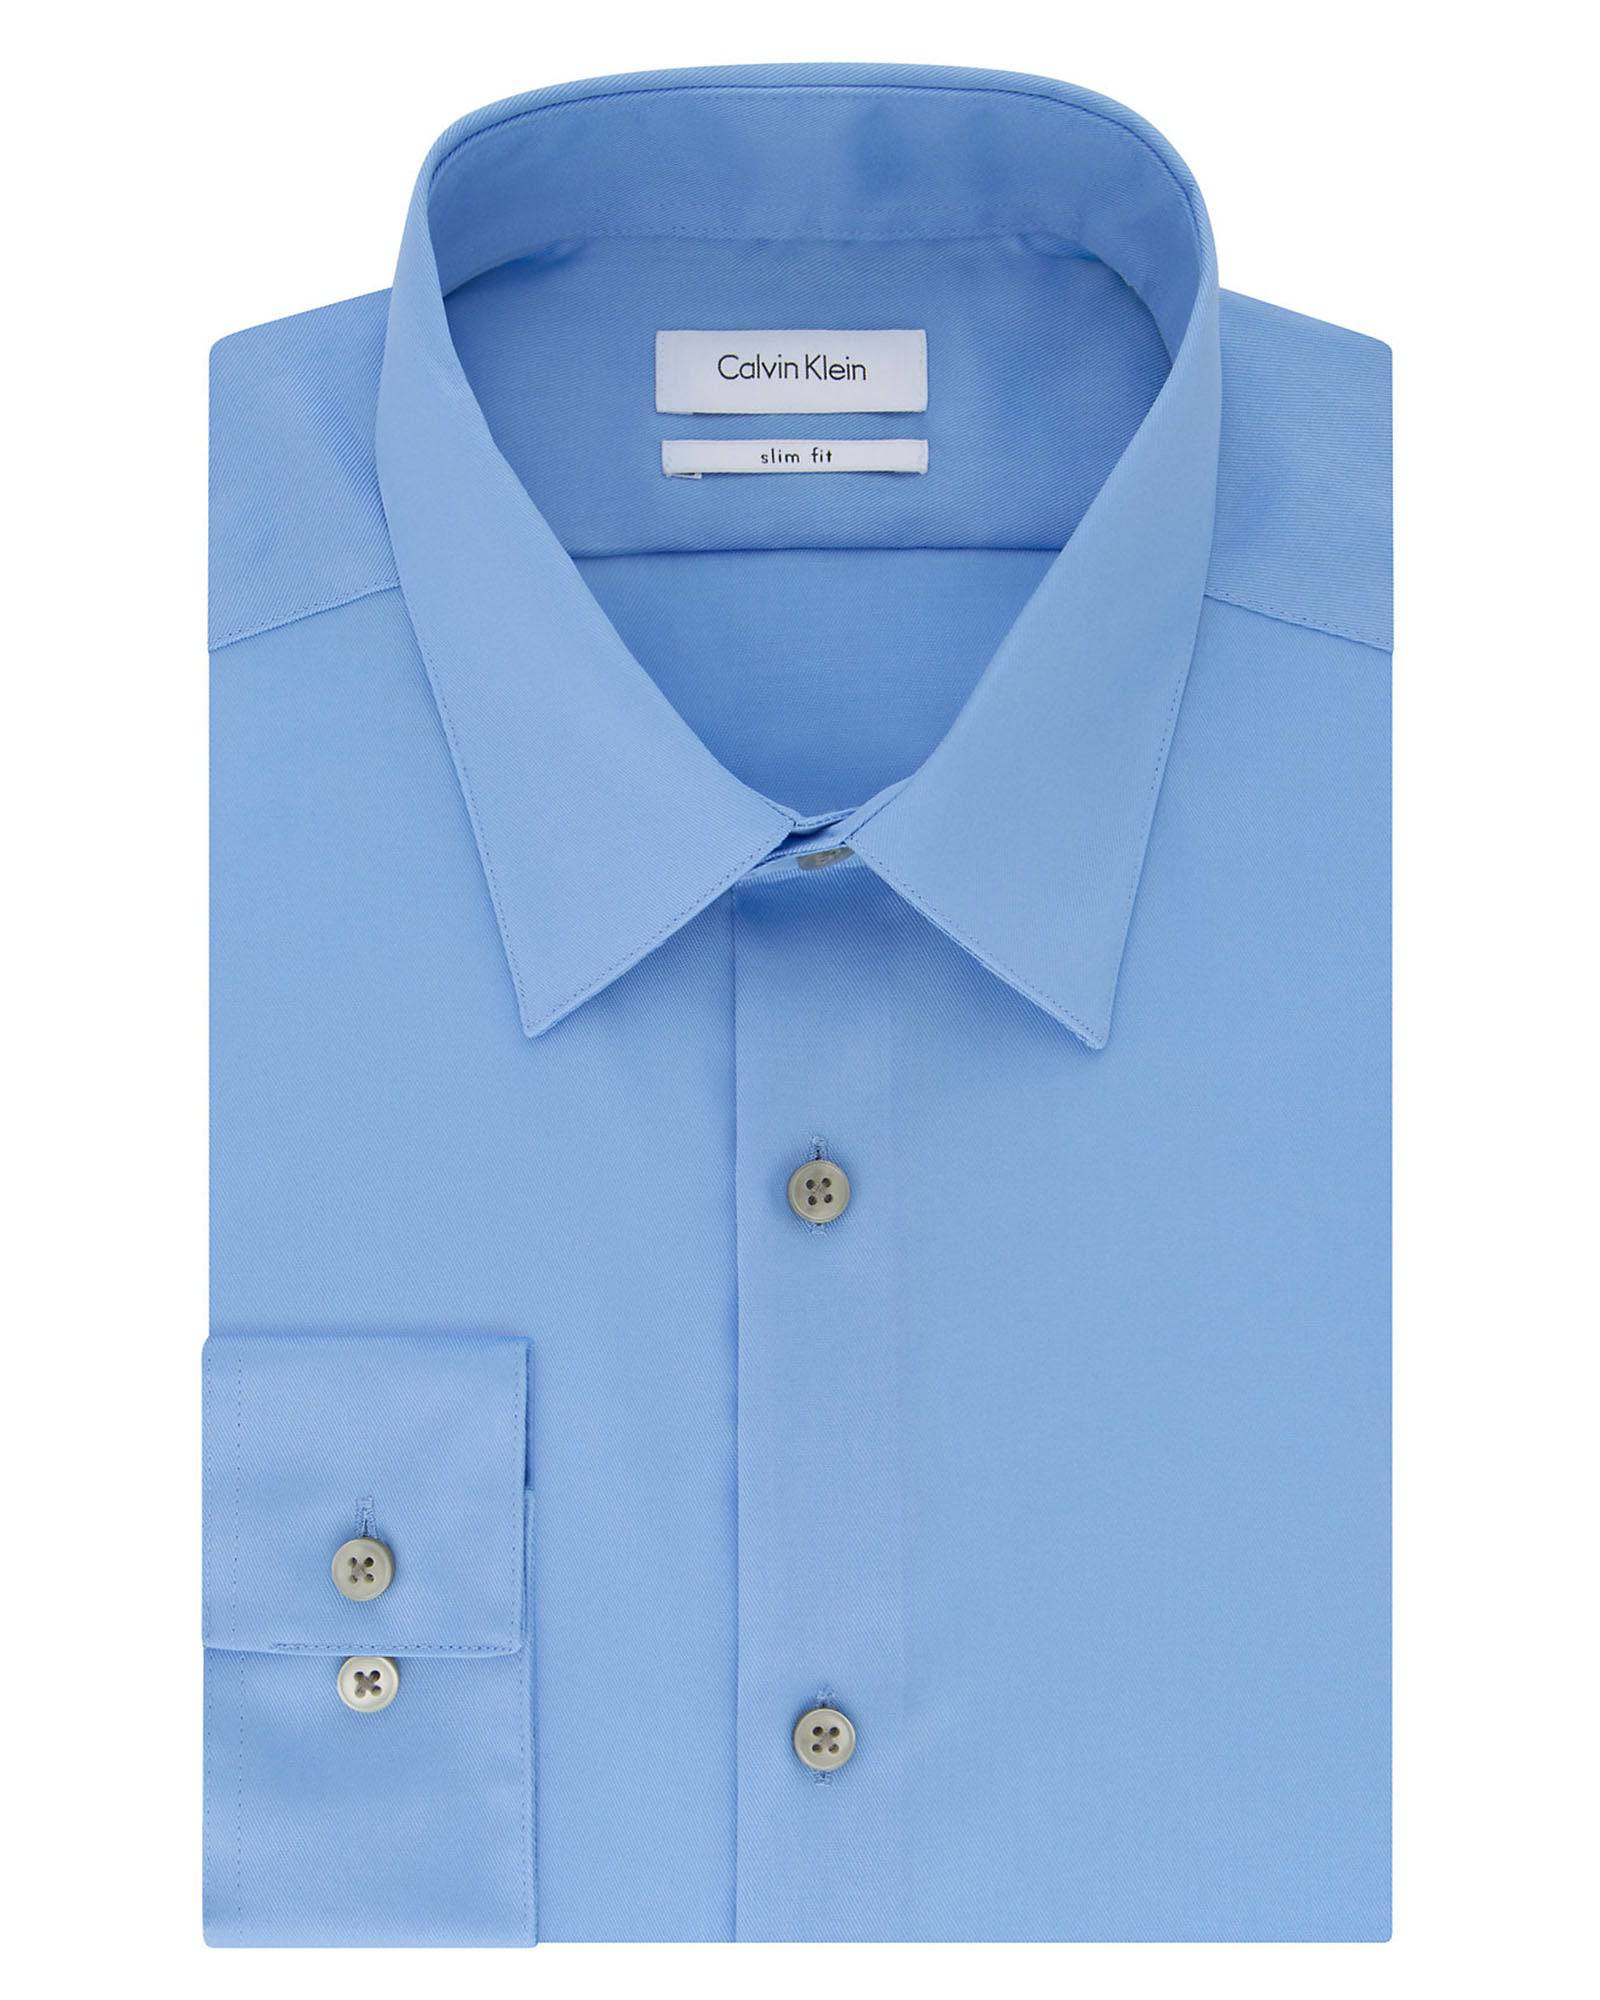 Calvin Klein Slim Fit Stretch Dress Shirt in Blue - Rainwater's Men's Clothing and Tuxedo Rental